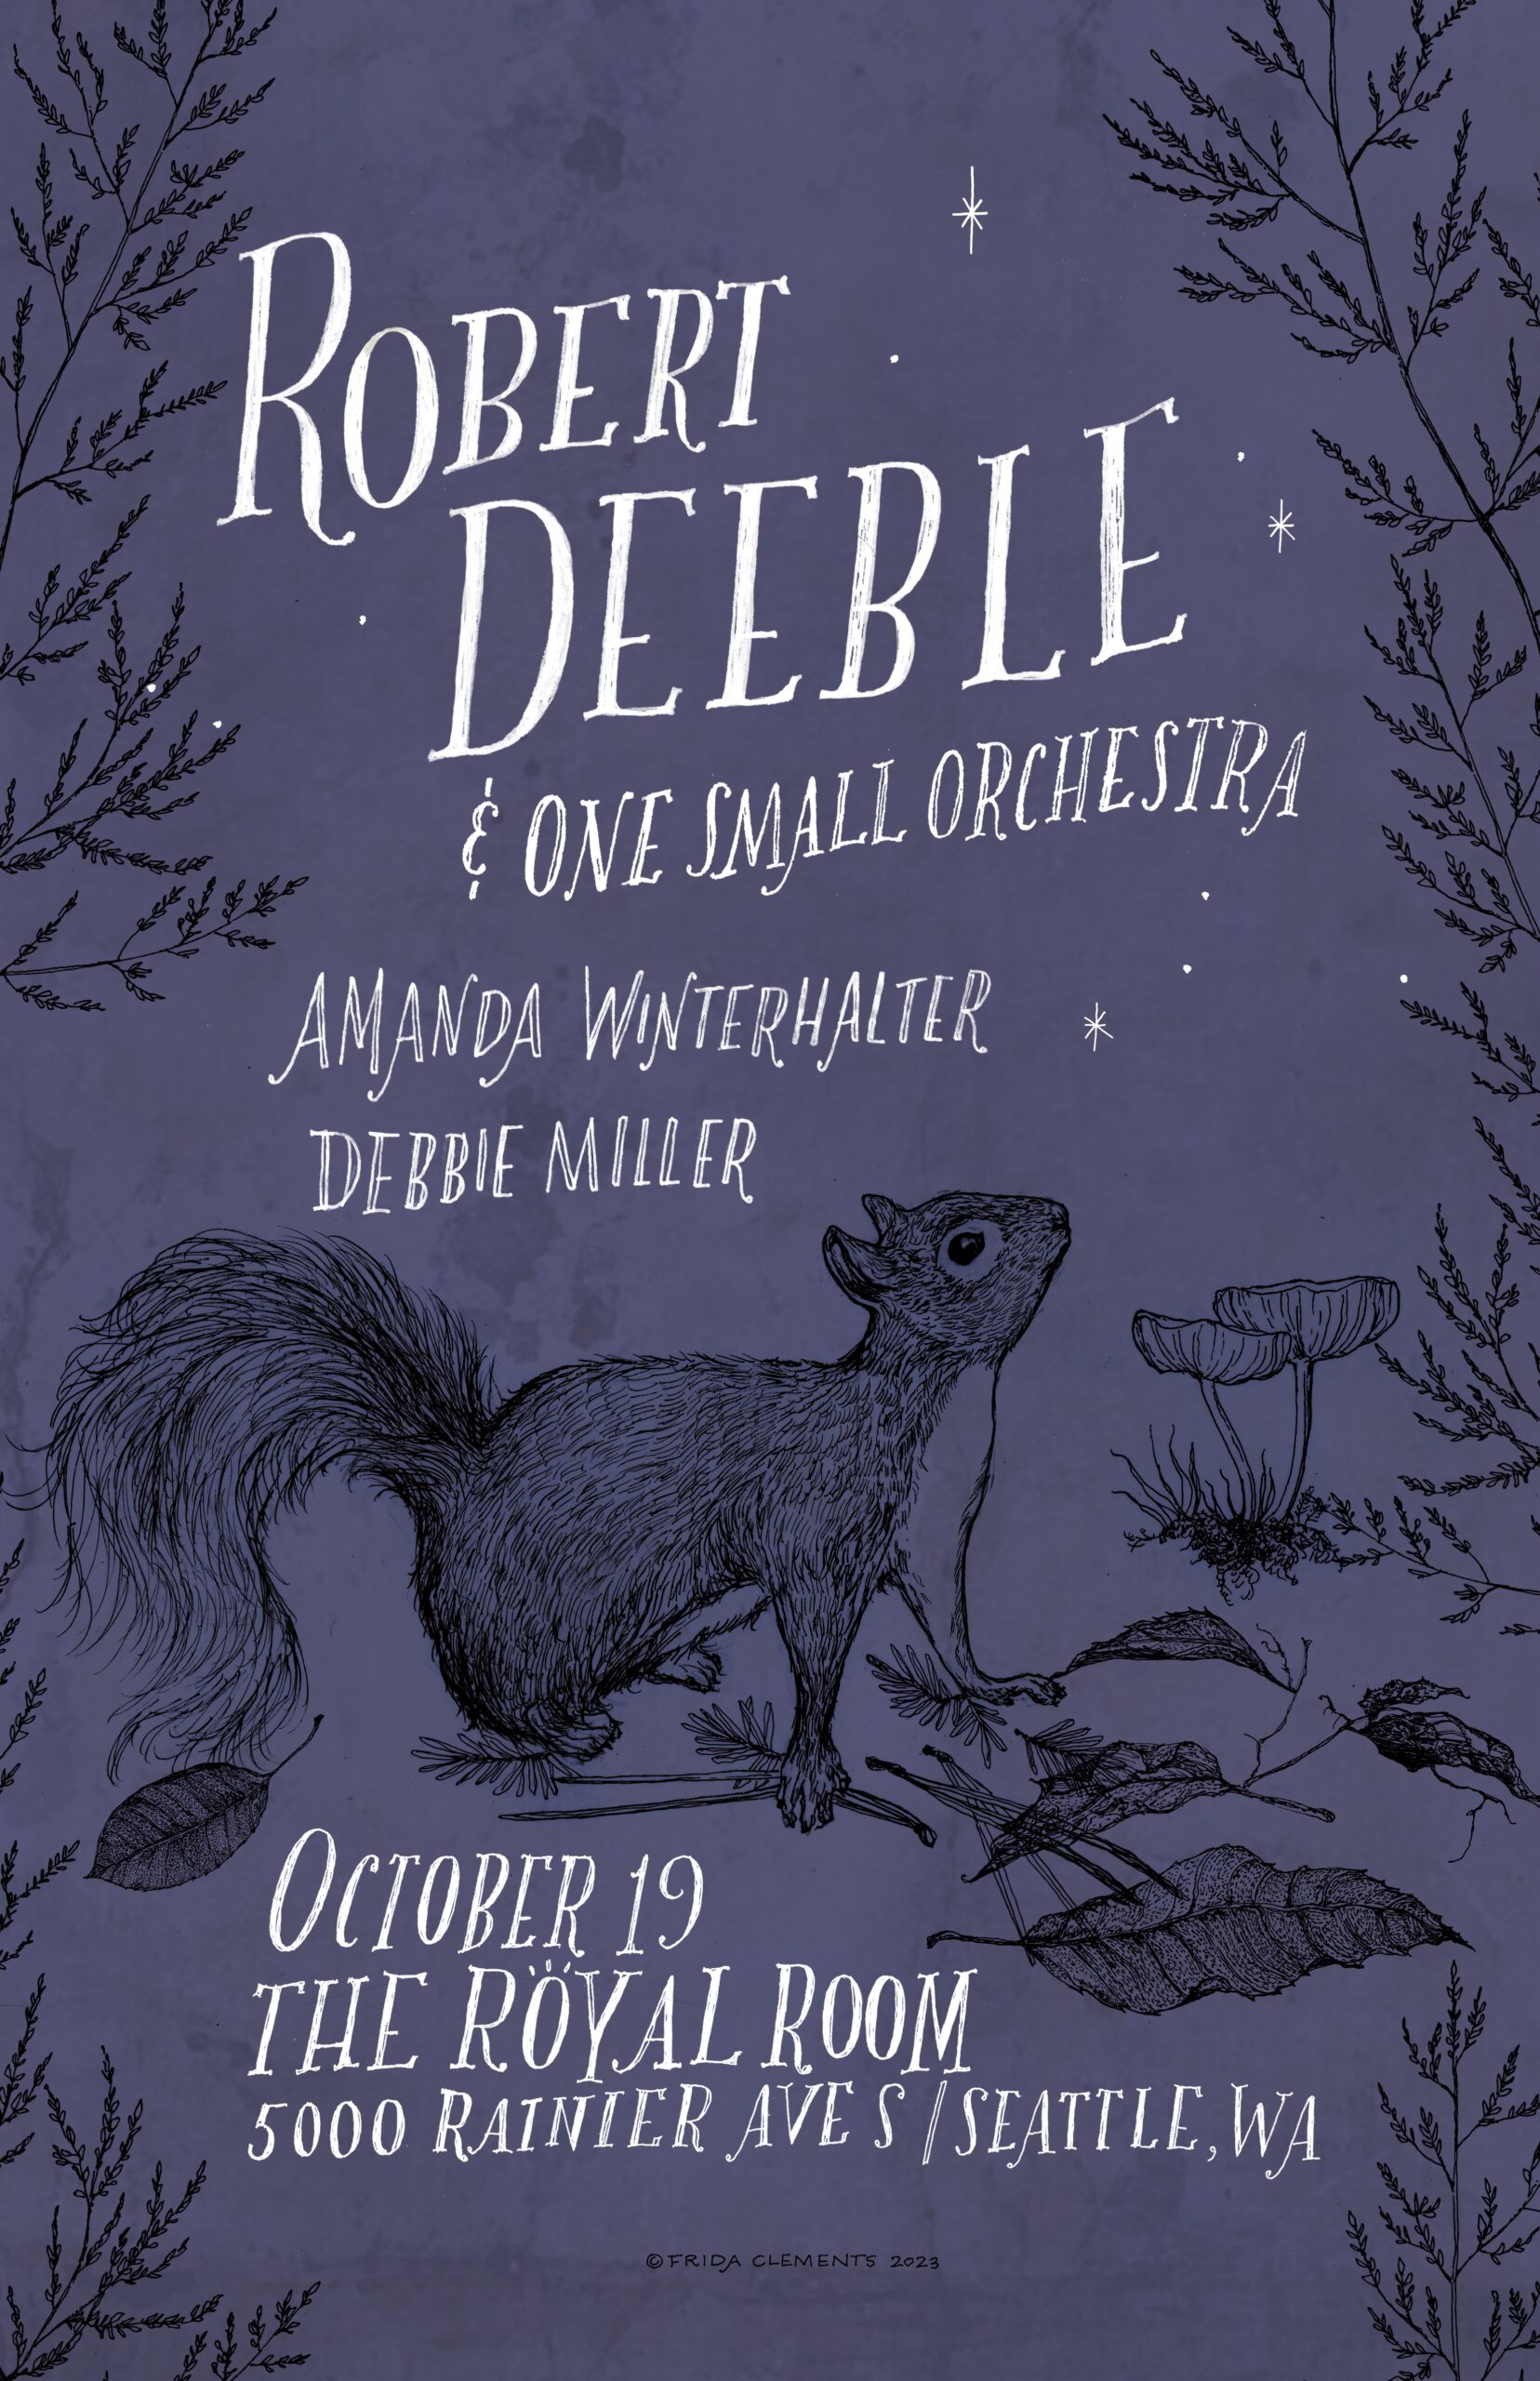 Robert Deeble & One Small Orchestra  w/ Amanda Winterhalter and Debbie Miller